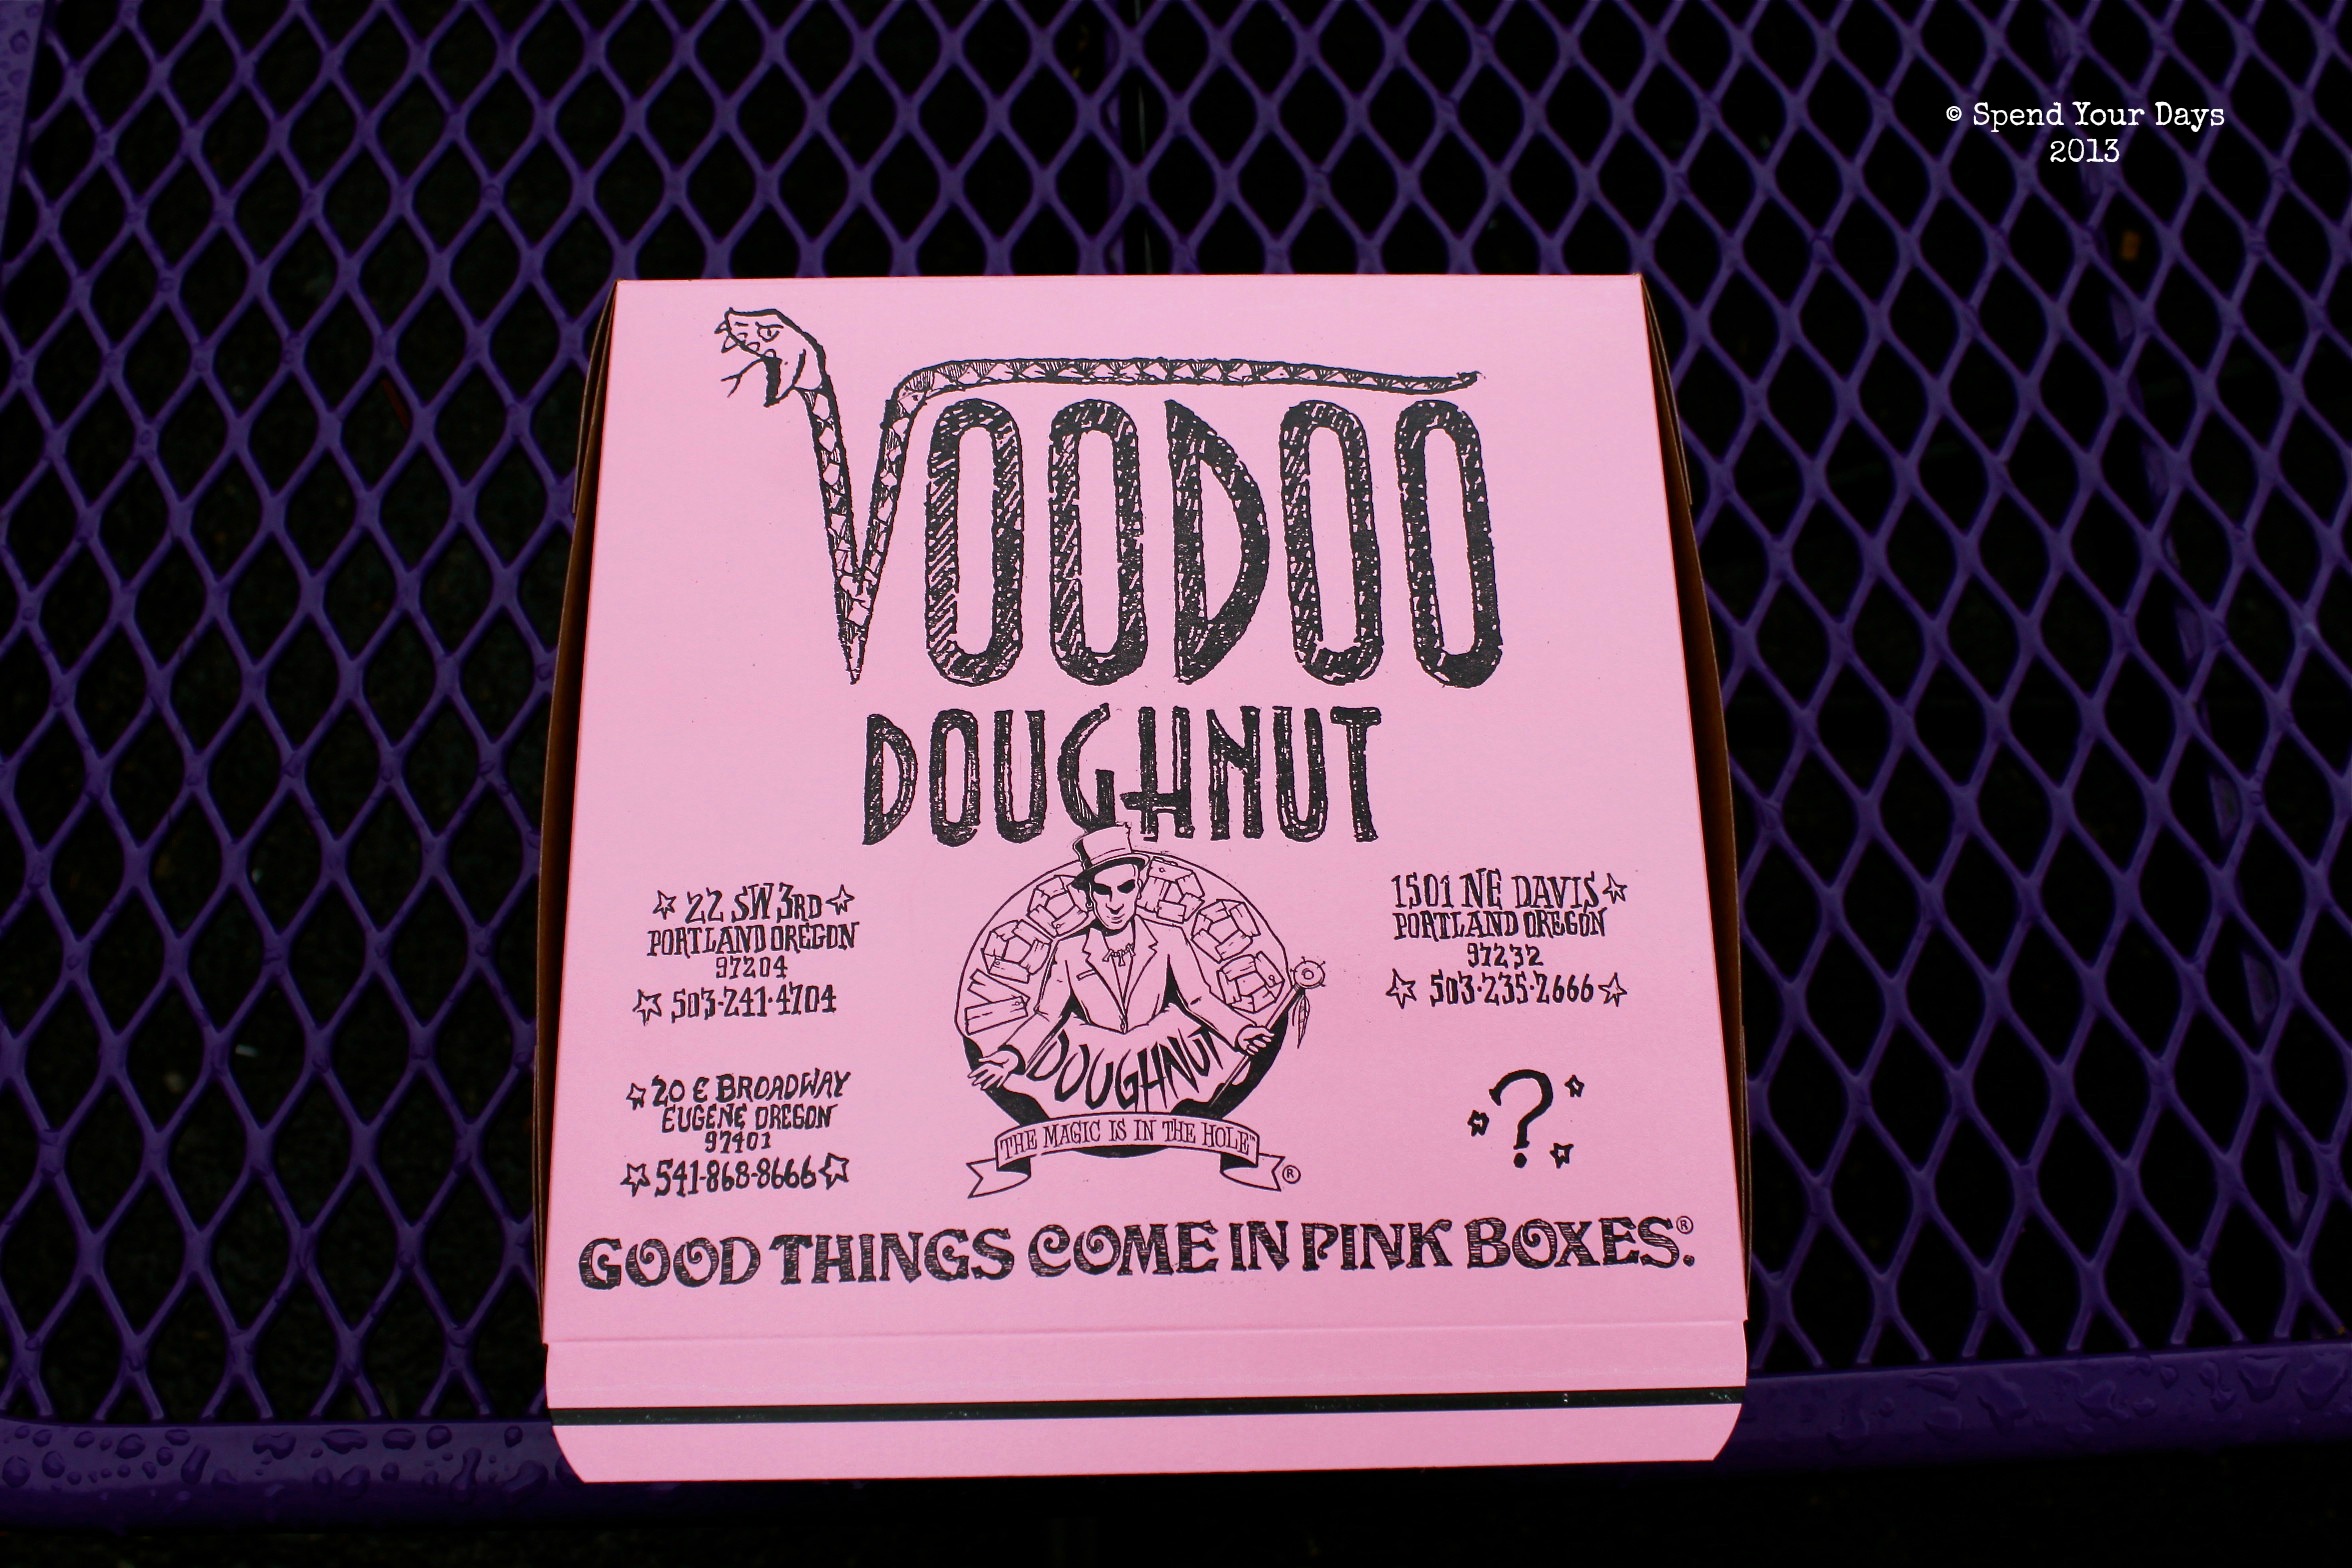 voodoo doughnut portland or